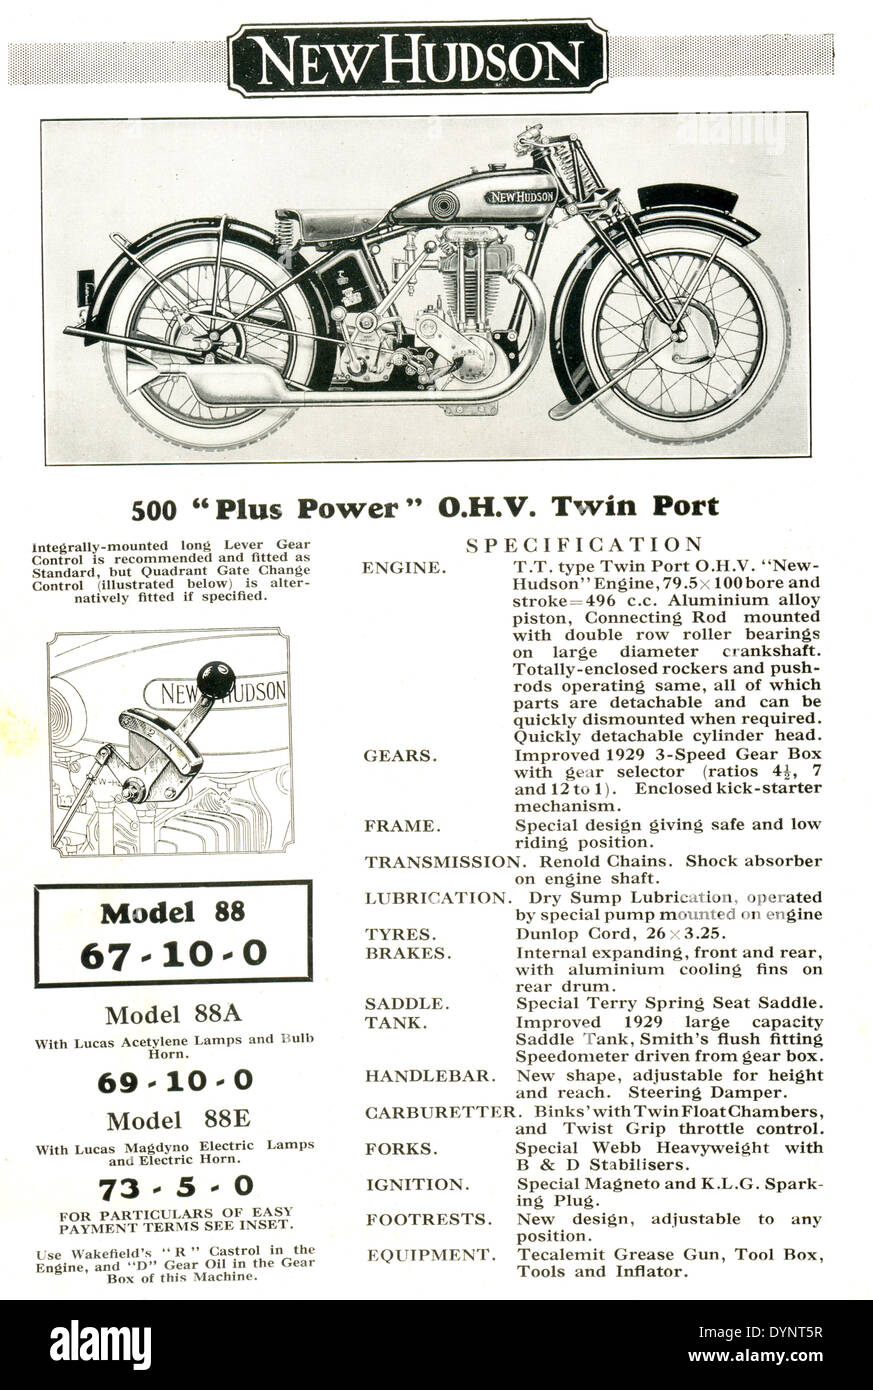 1929 page Catalogue de New Hudson Motor Cycles Banque D'Images